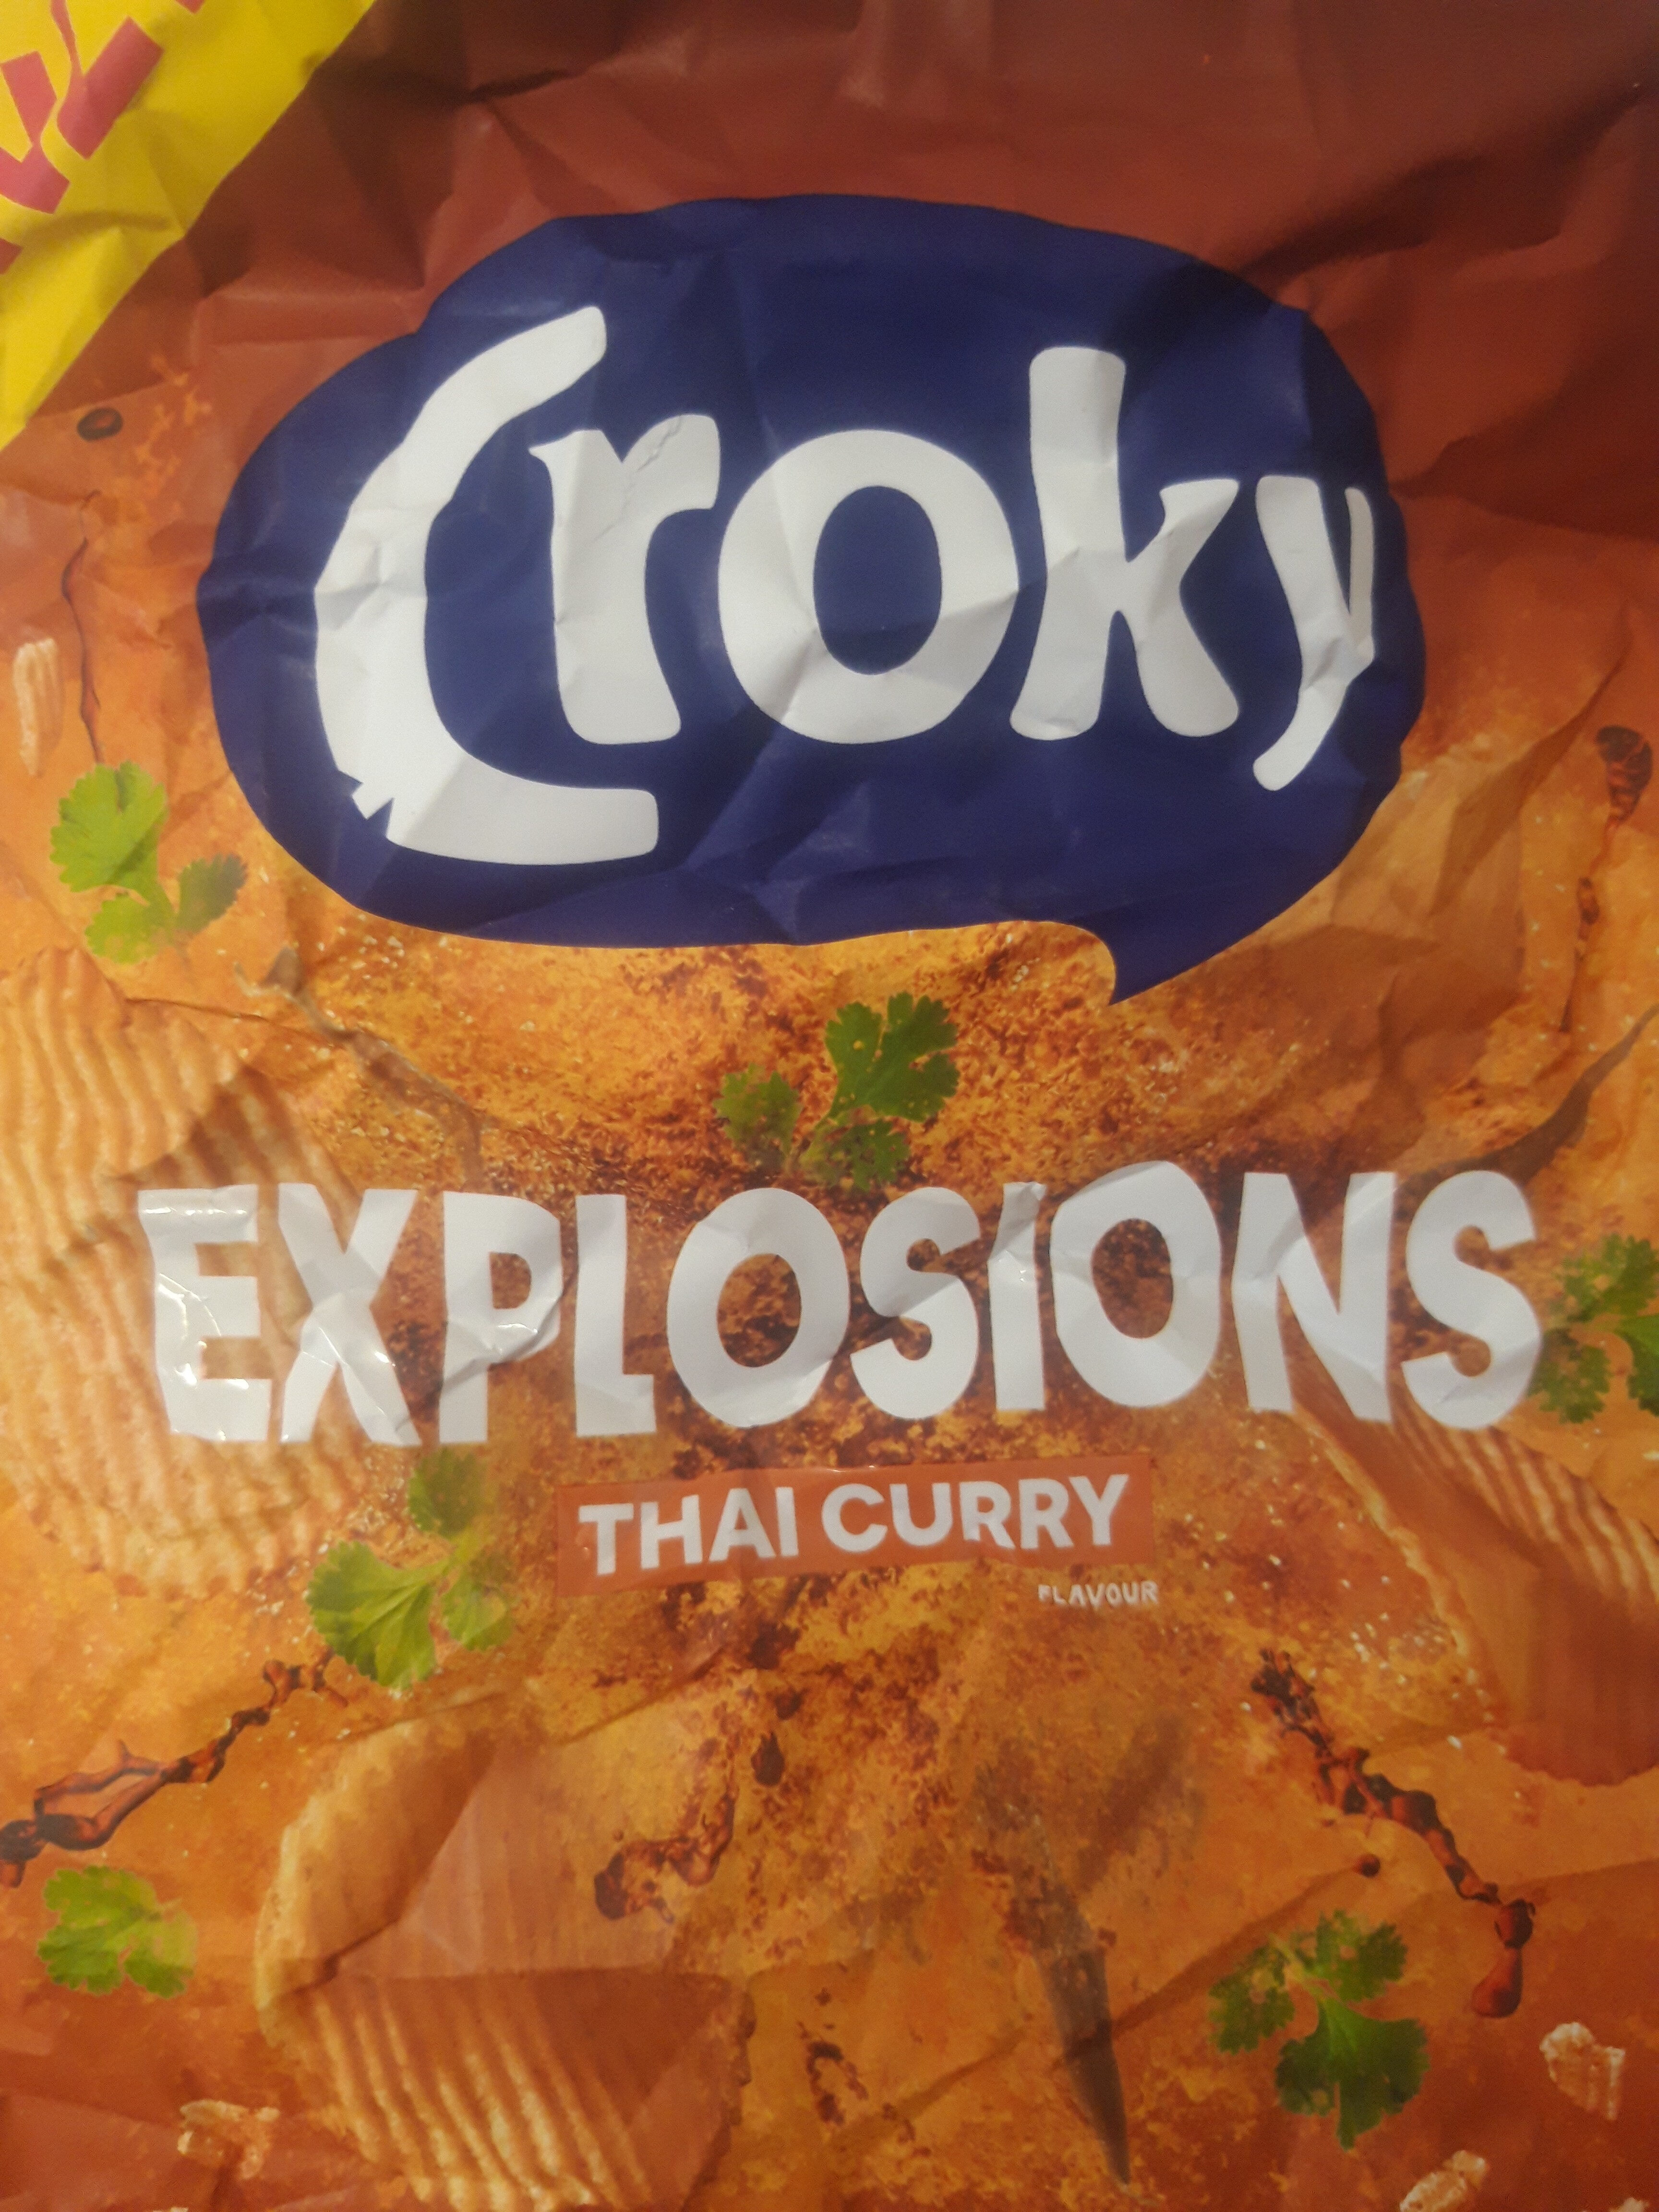 Croky explosion Thai curry - Produit